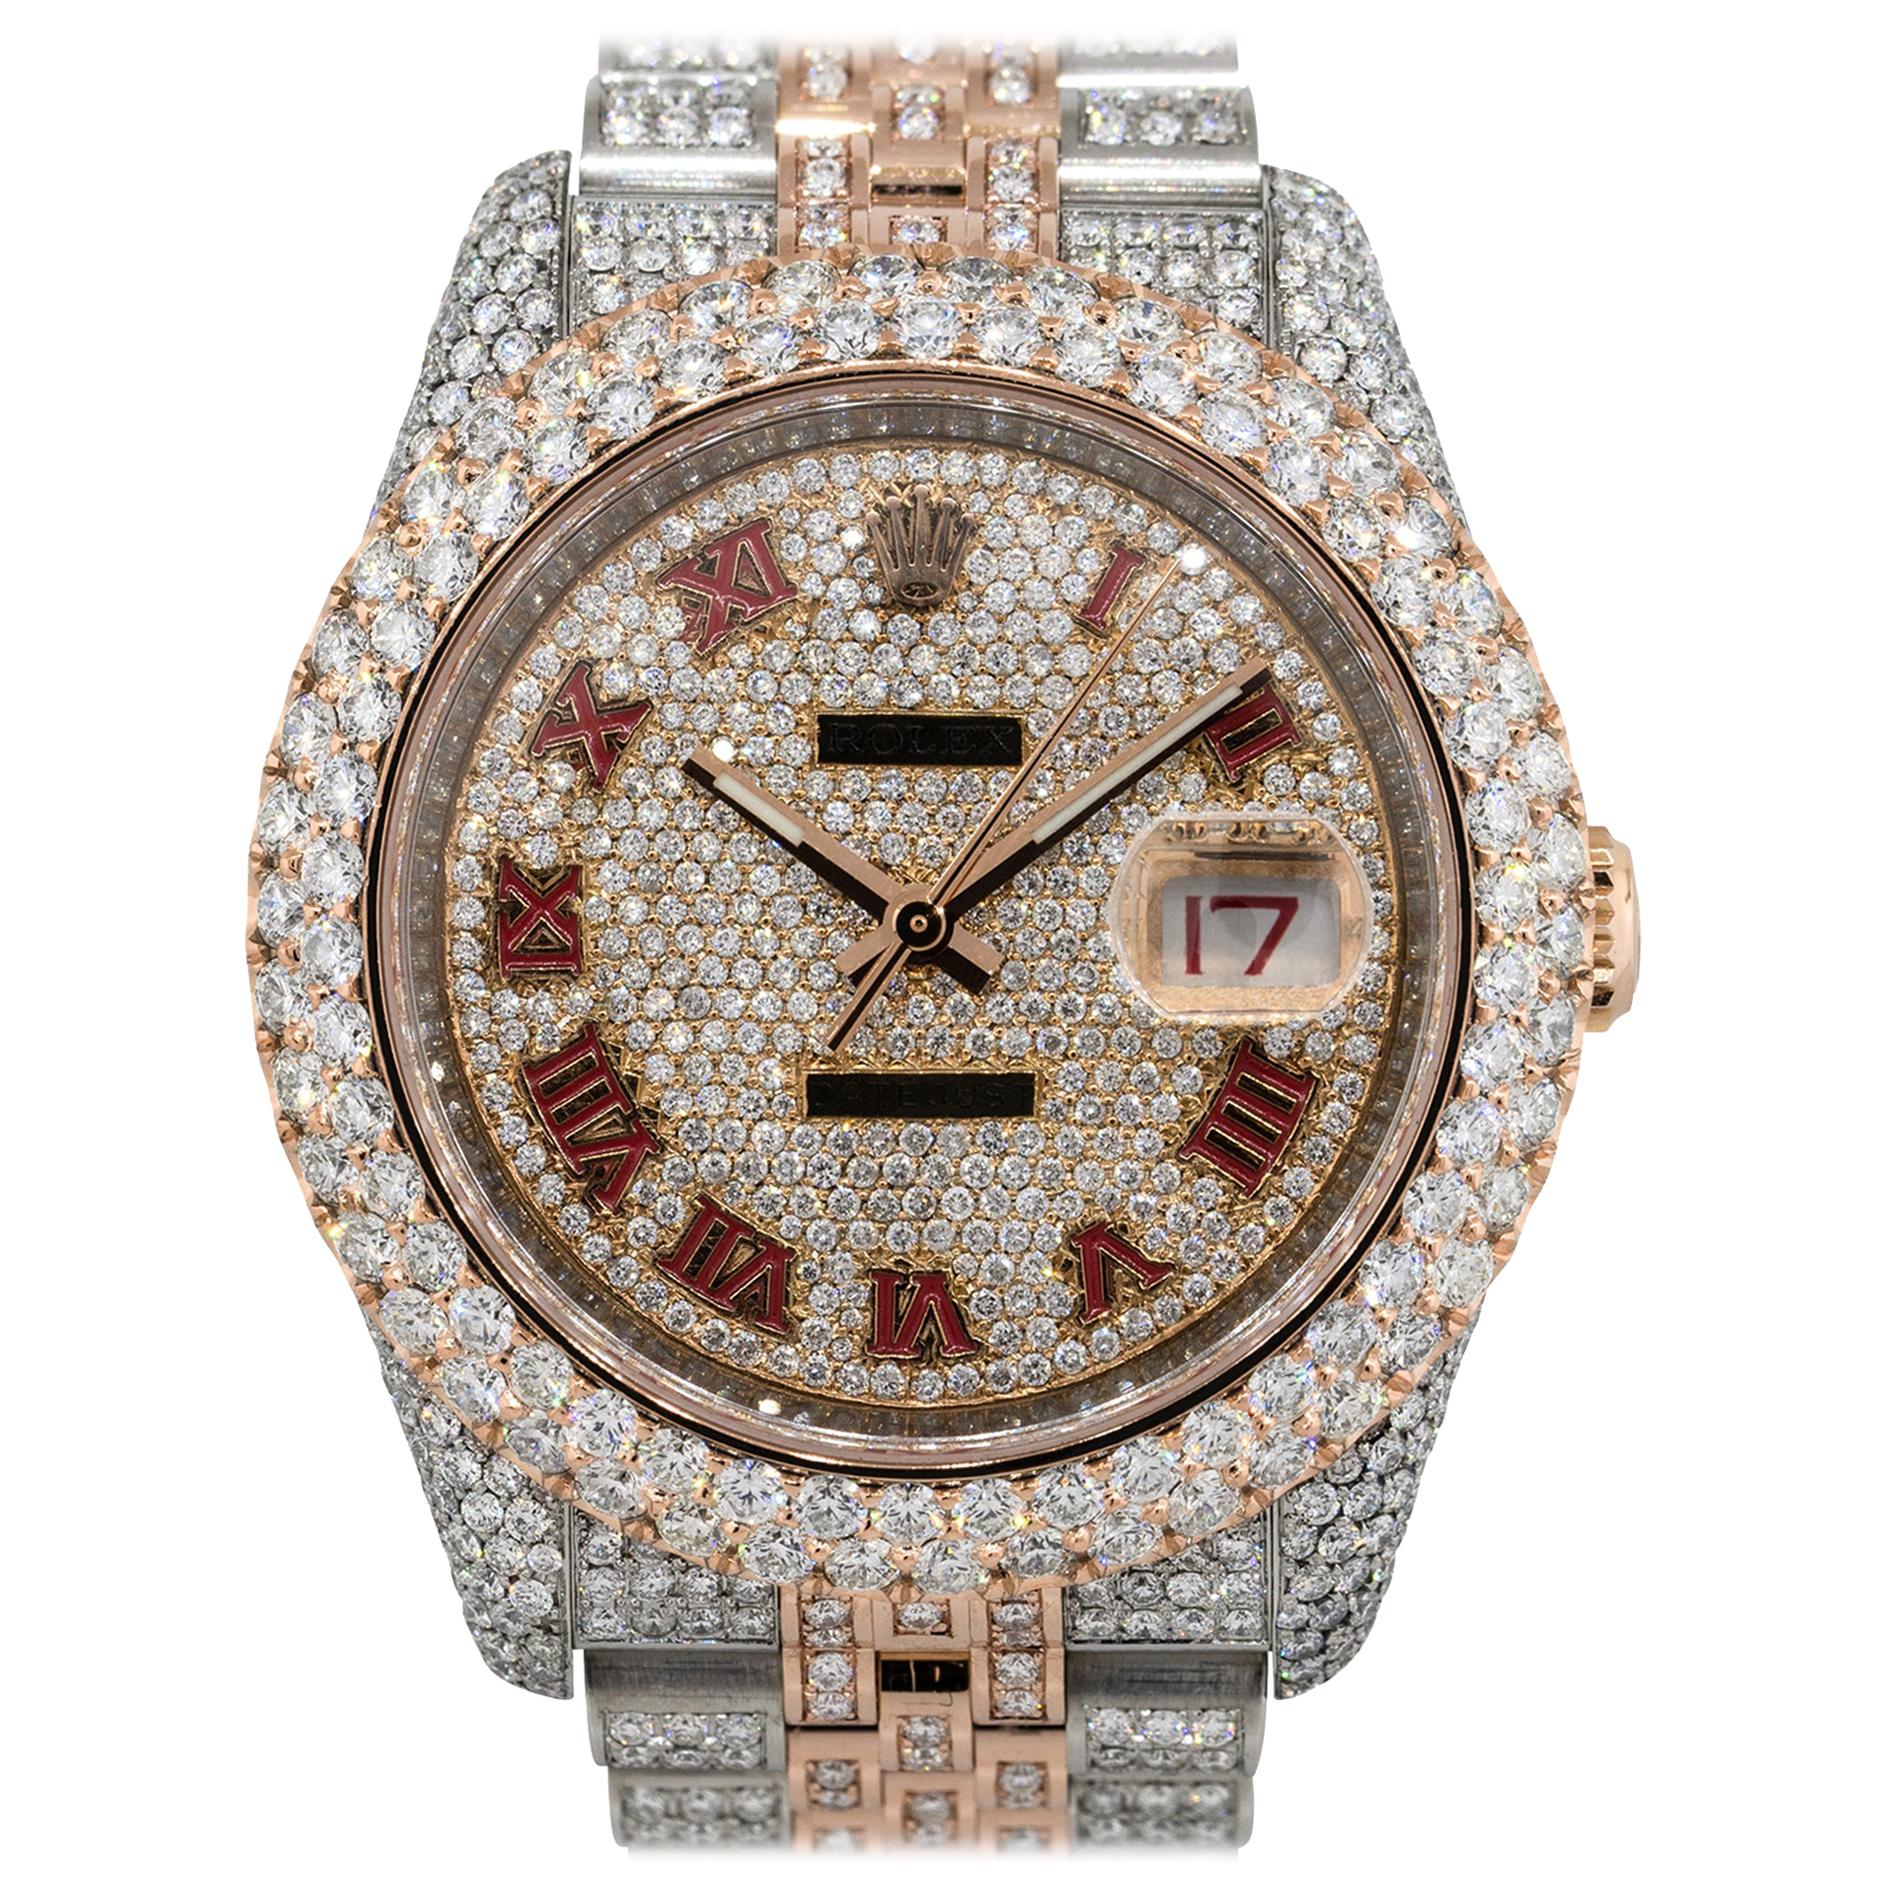 12.49 Carat Rolex 116201 Datejust Two-Tone Diamond Pave Watch